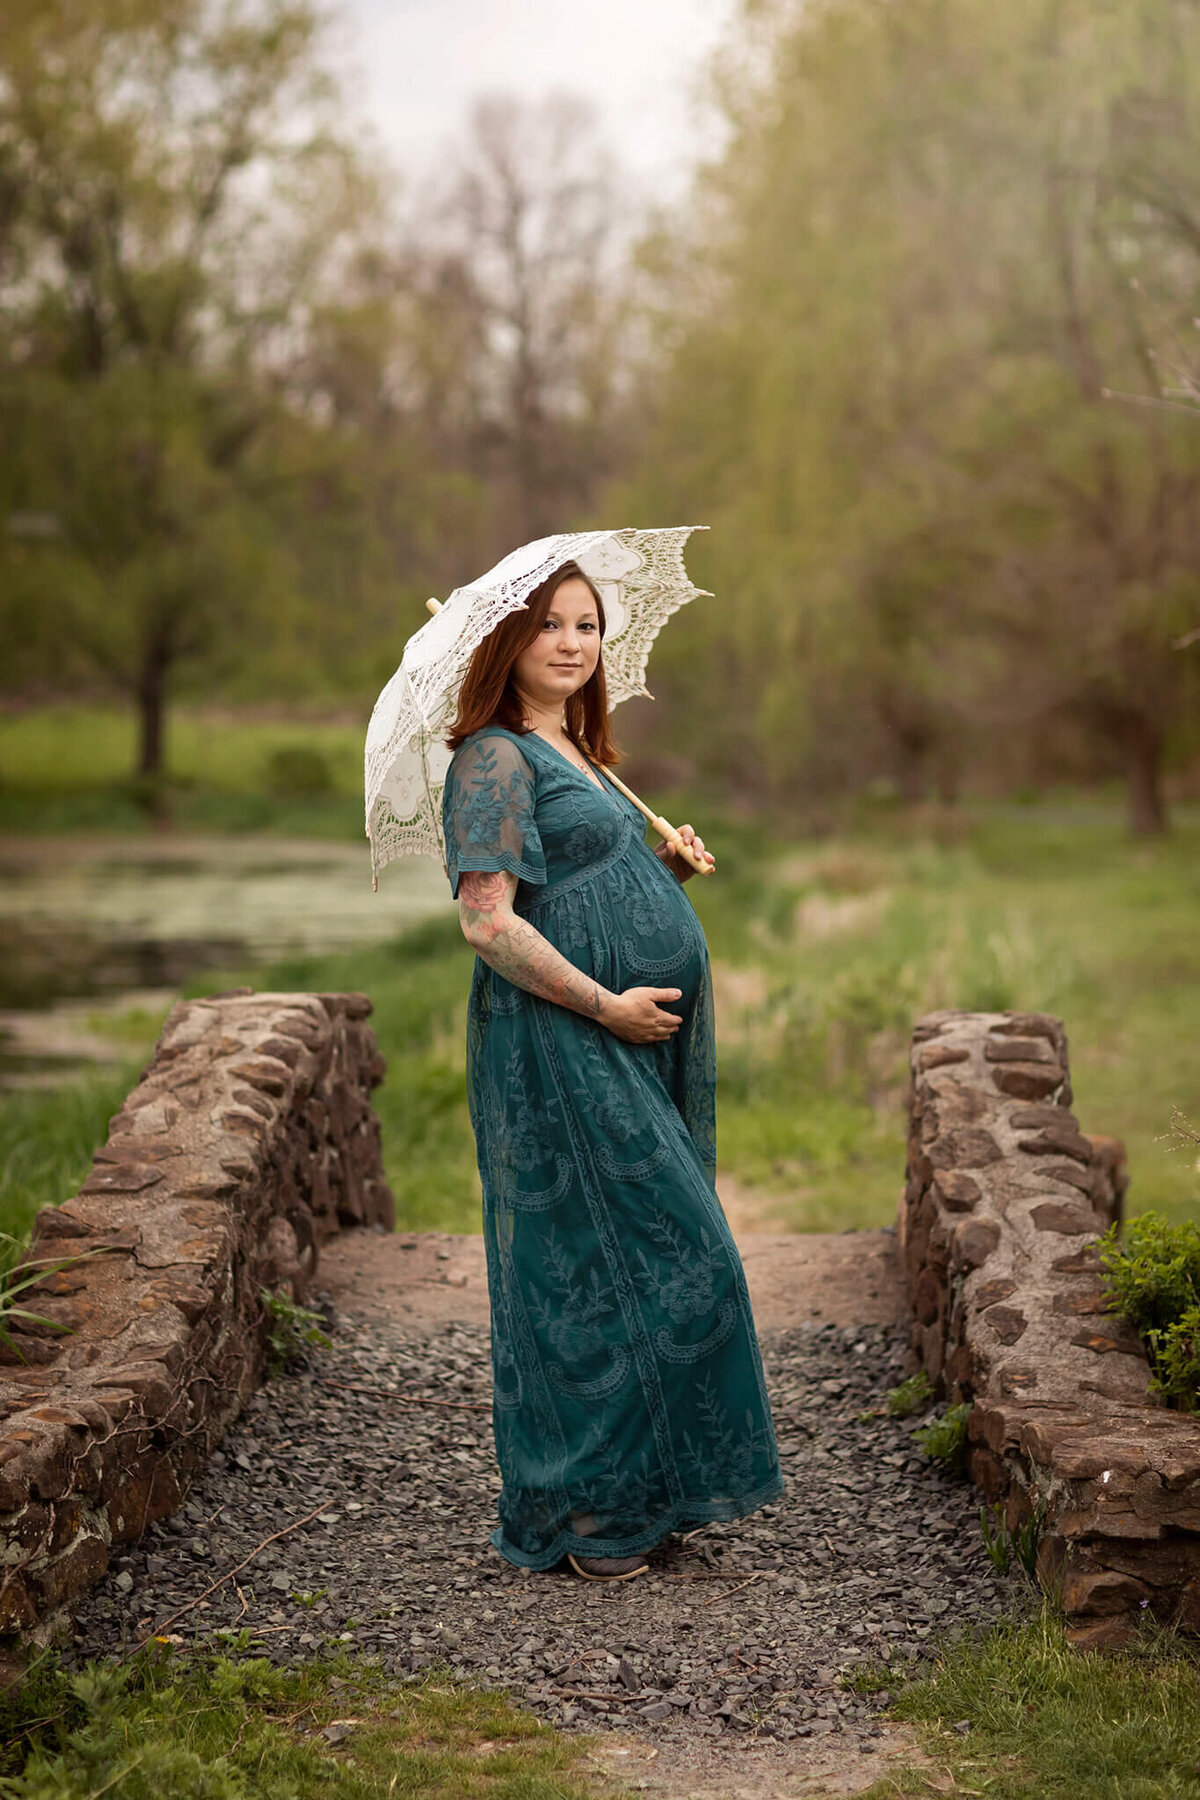 NJ Maternity photographer captures whimsical photo of expectant mom